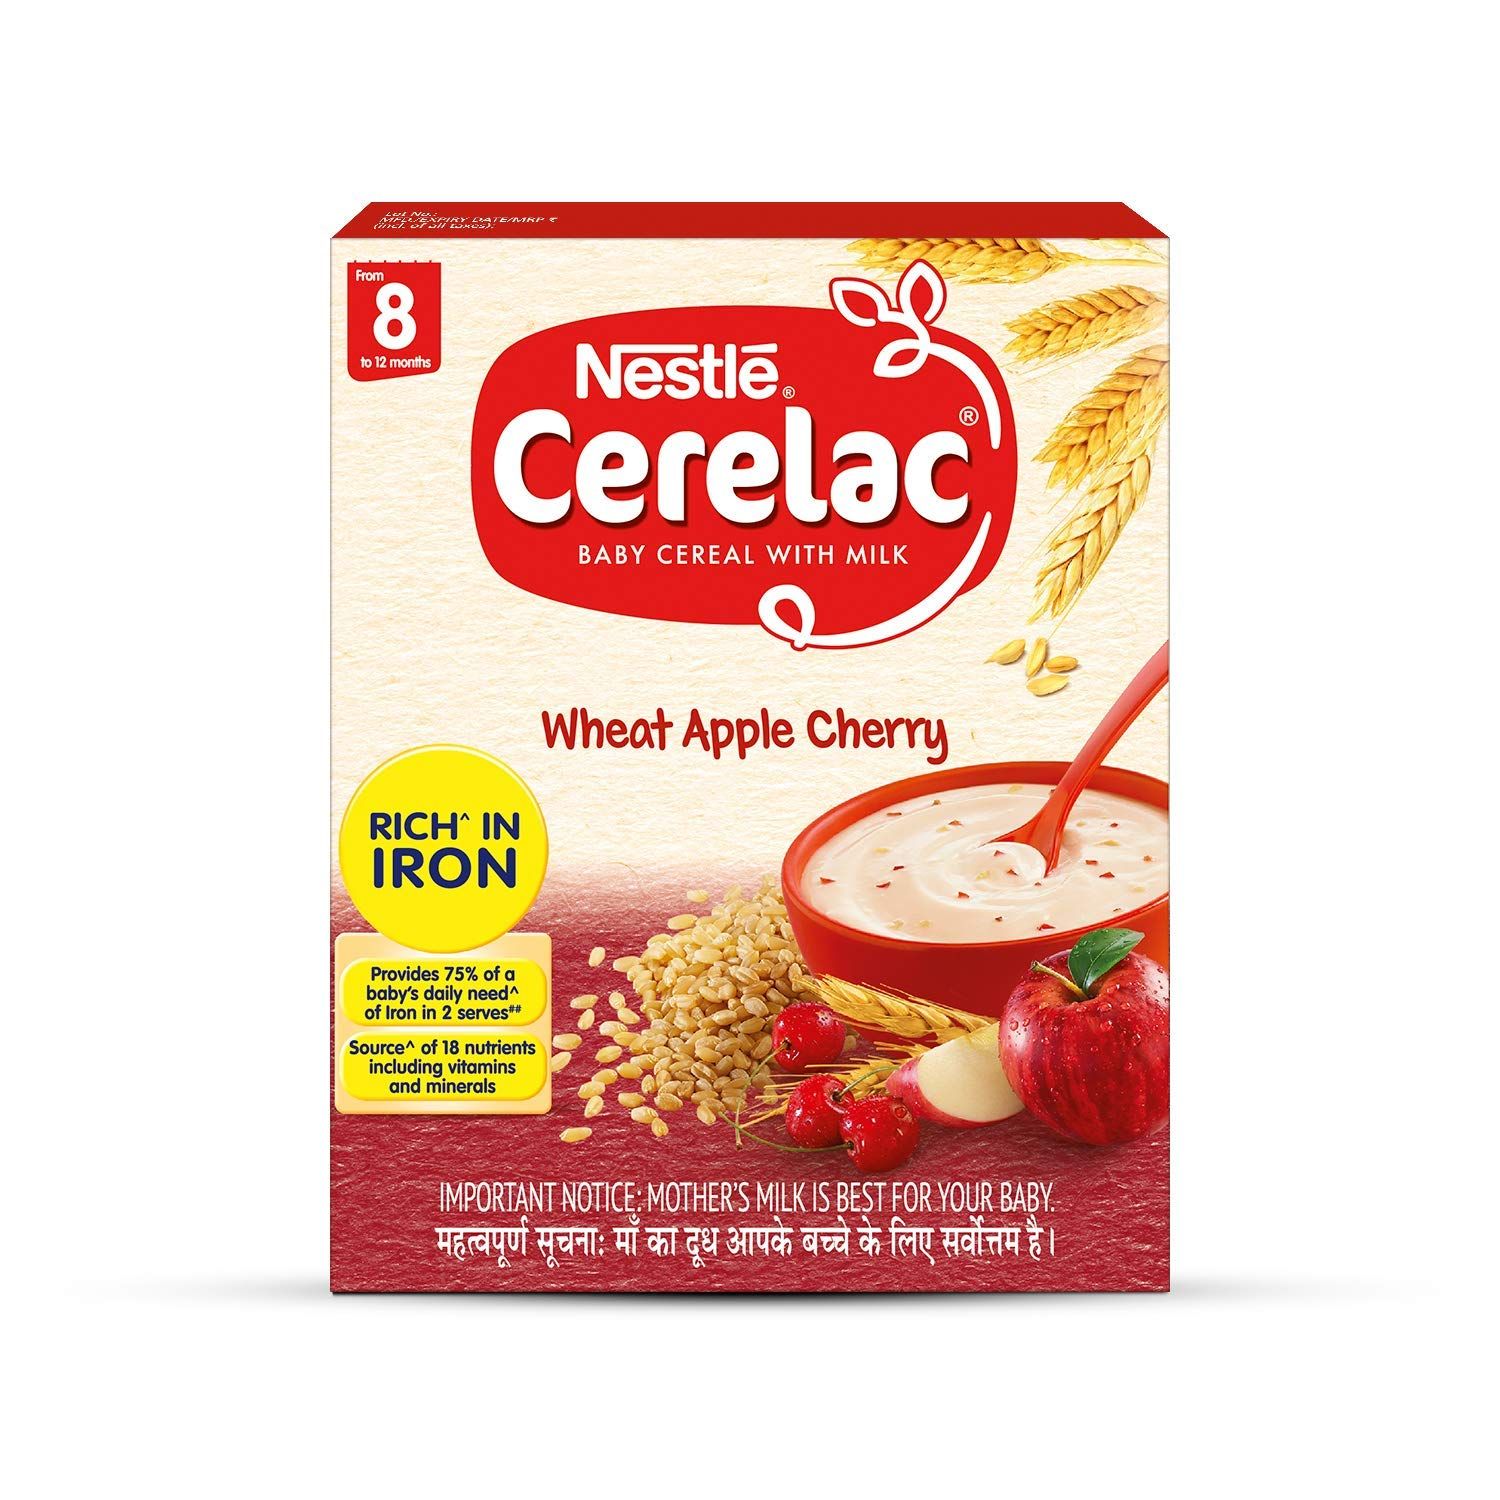 Nestle Cerelac Wheat Apple Cherry Image